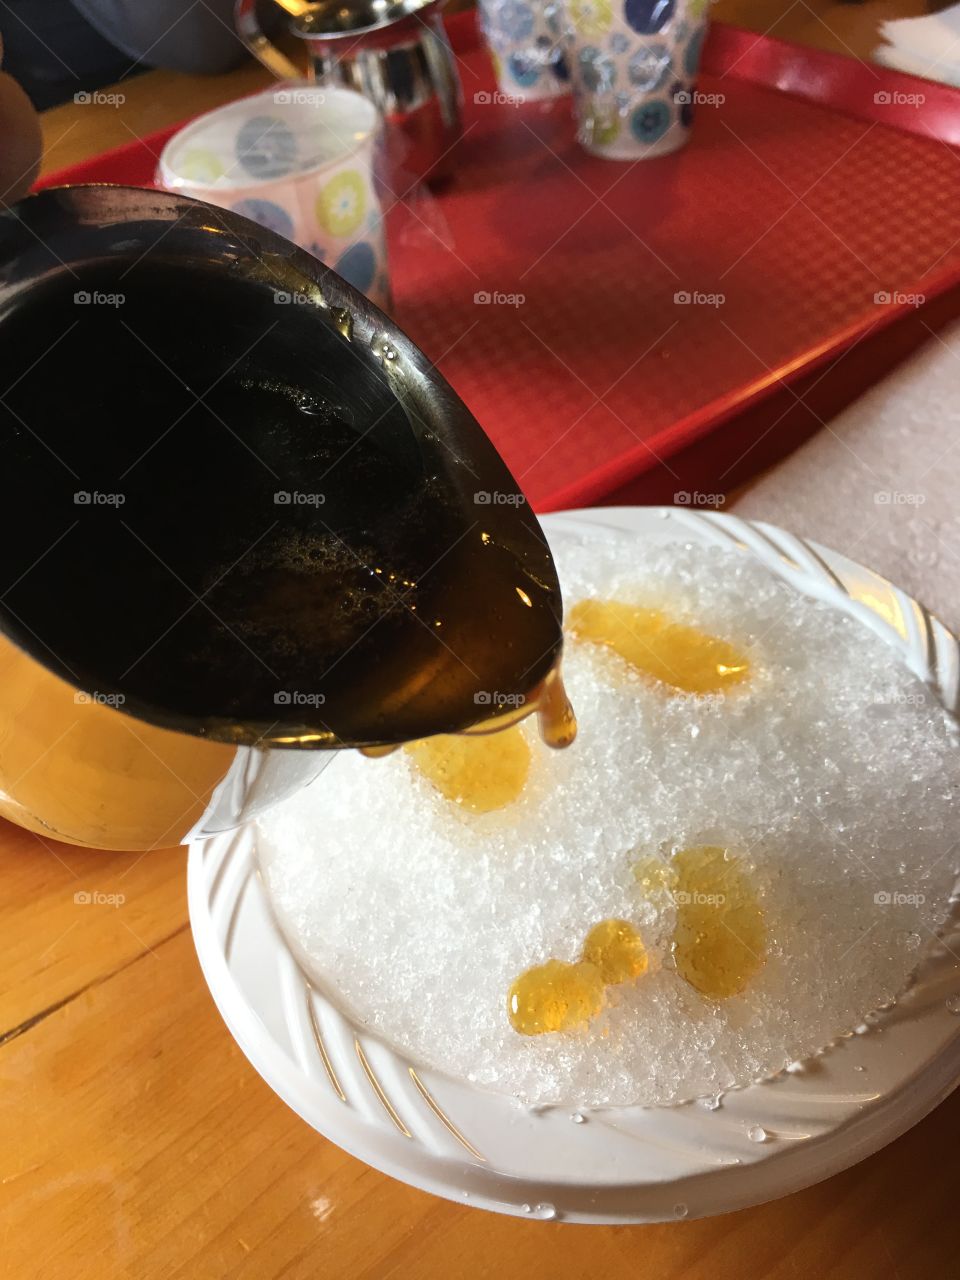 Sugar on Snow